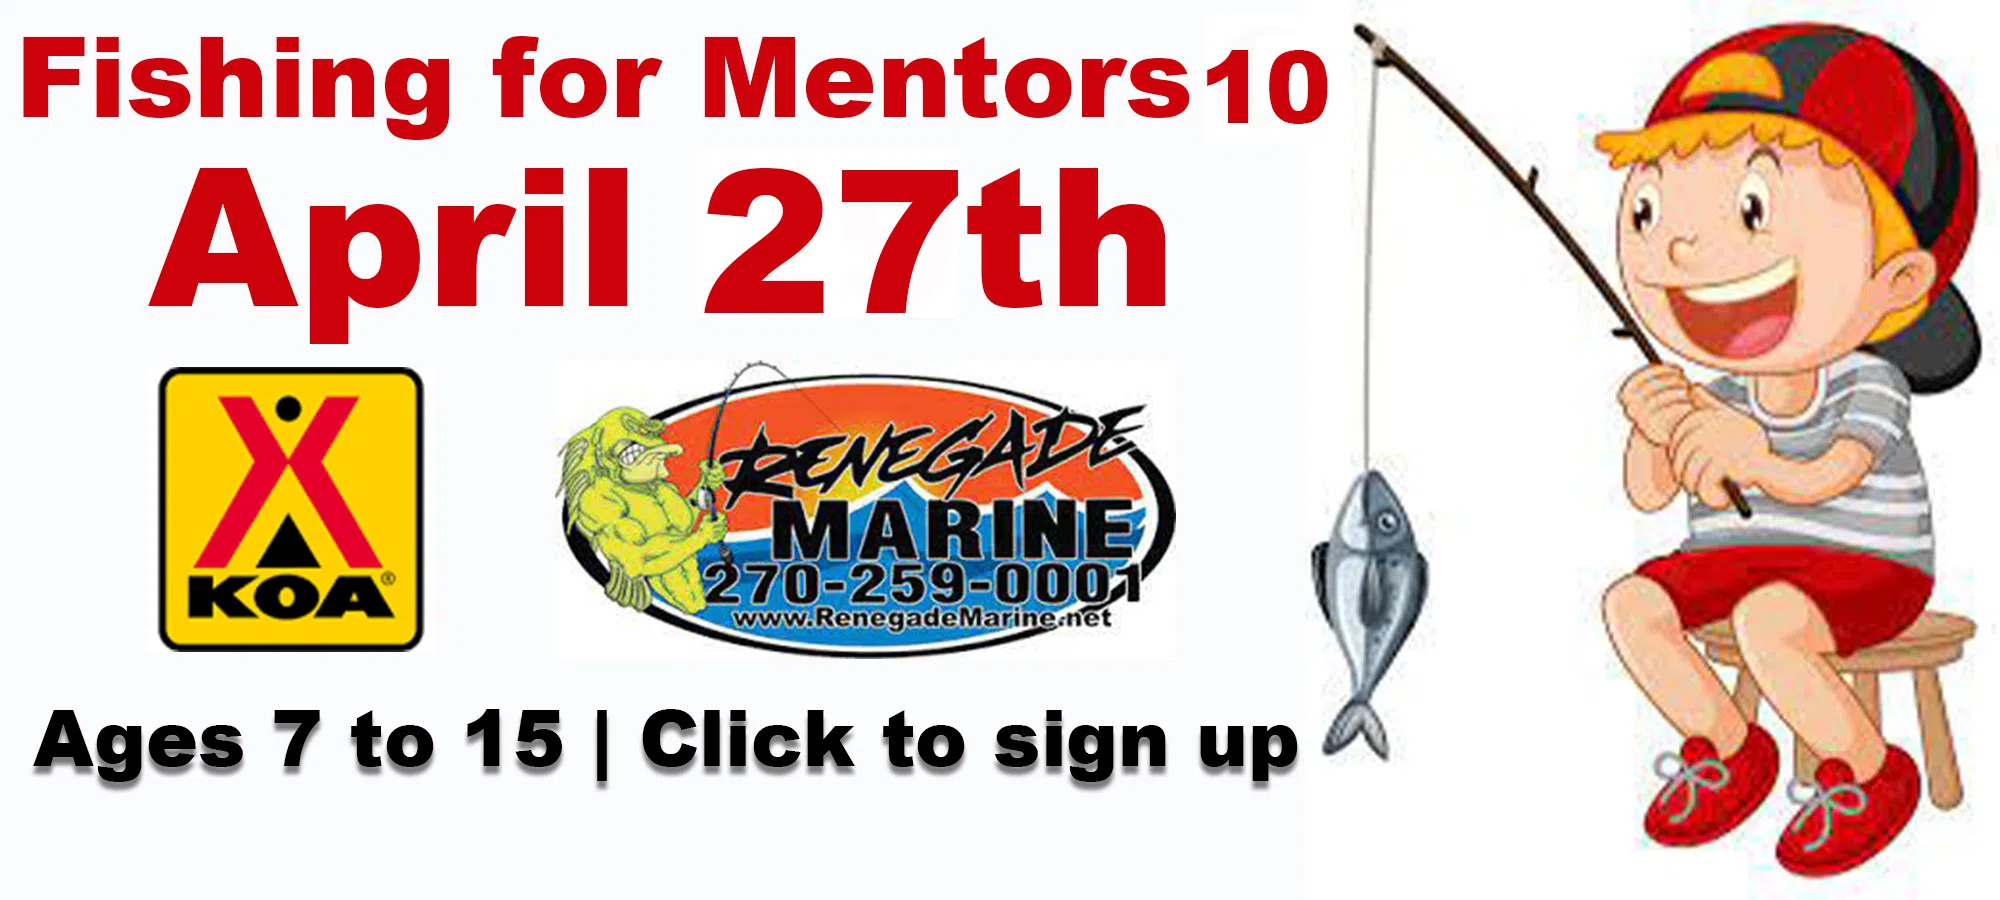 Feature: https://espnradio1027.com/win/fishing-for-mentors-registration/